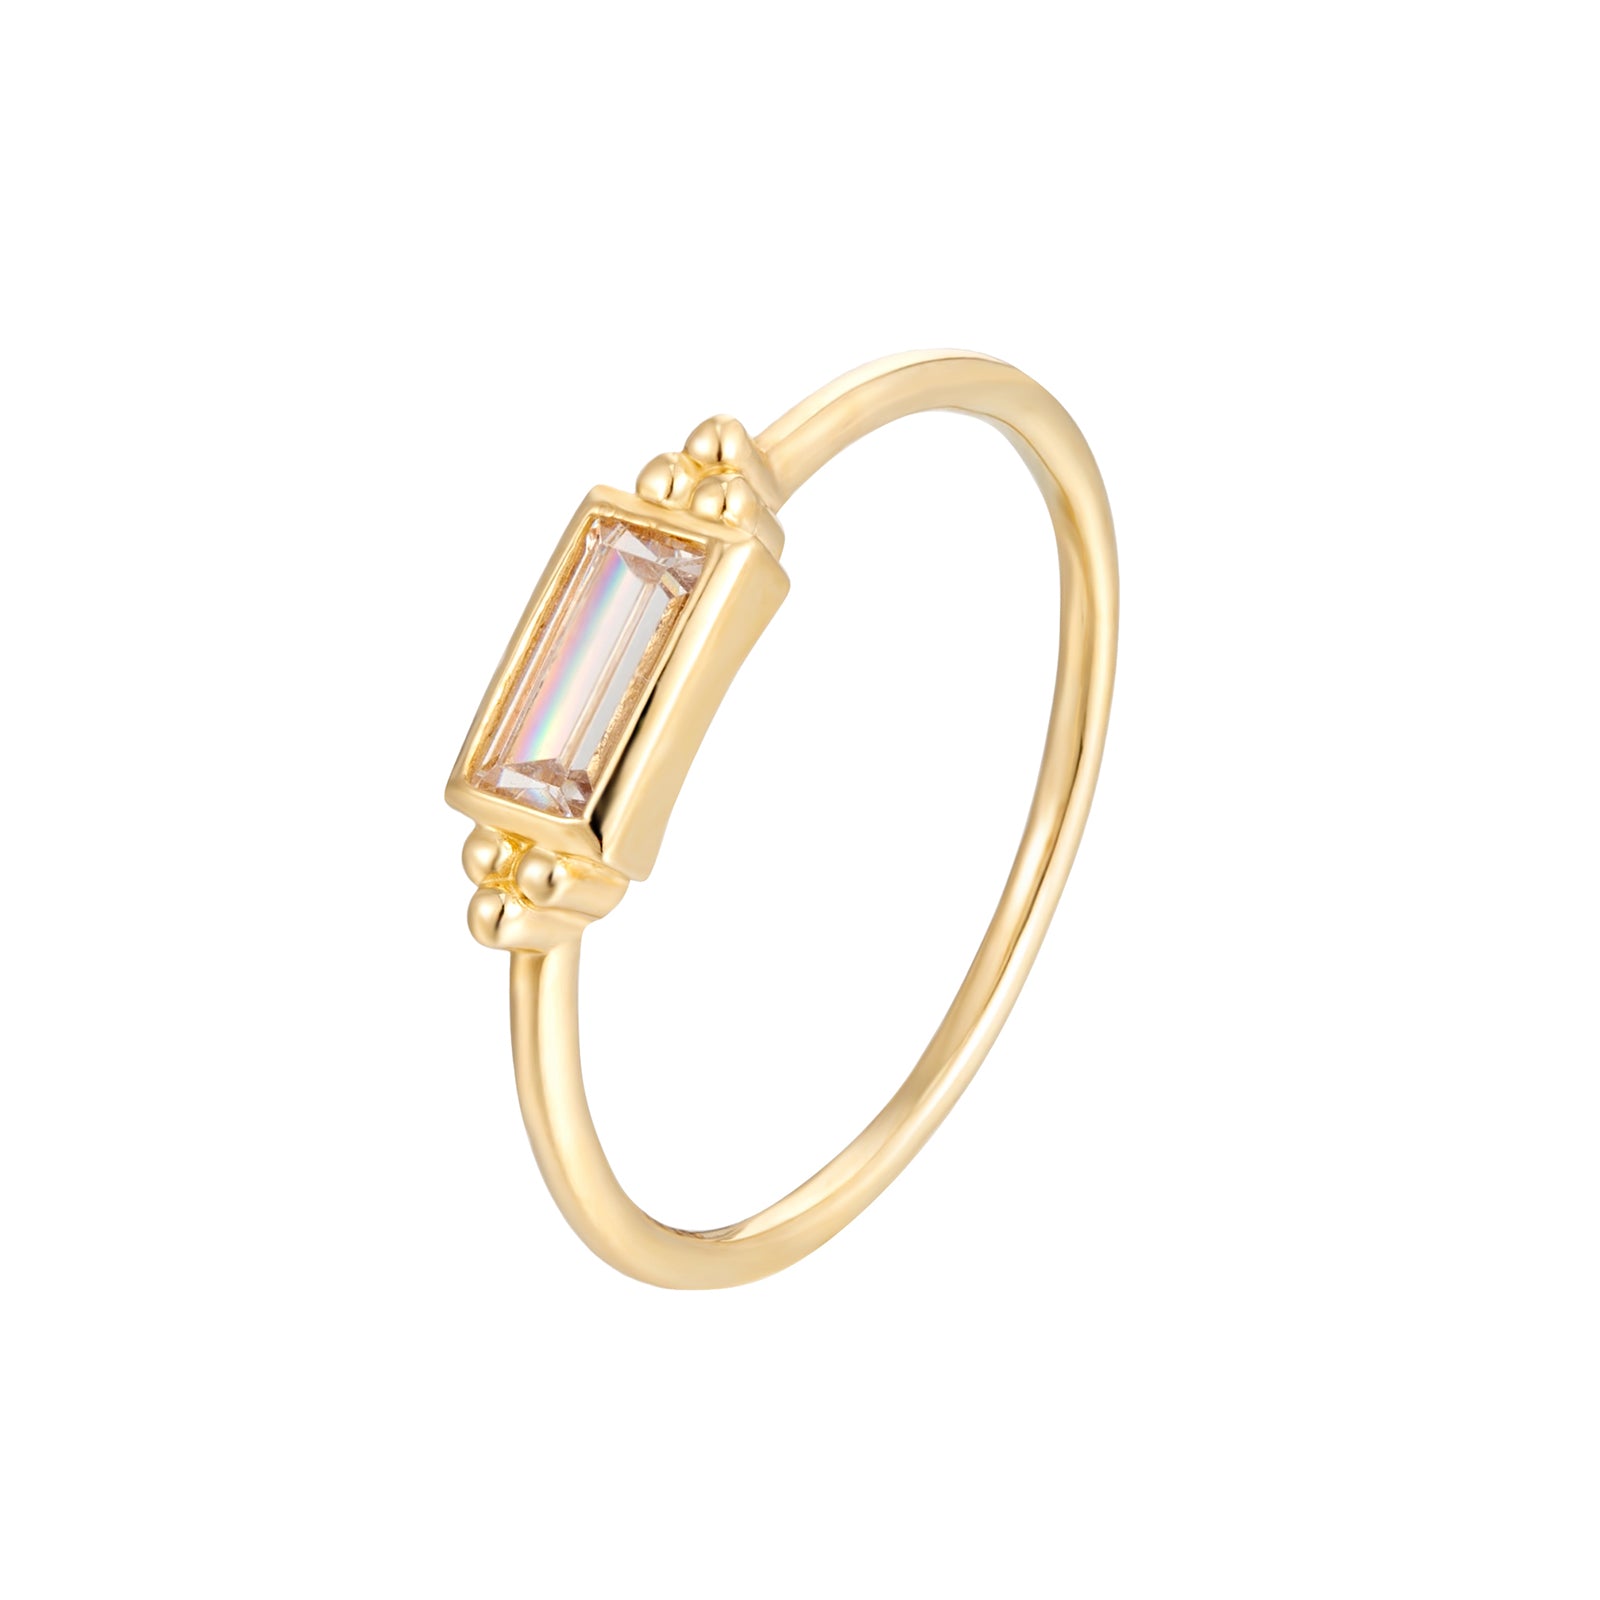 Seol Gold - 9ct Gold wedding Ring